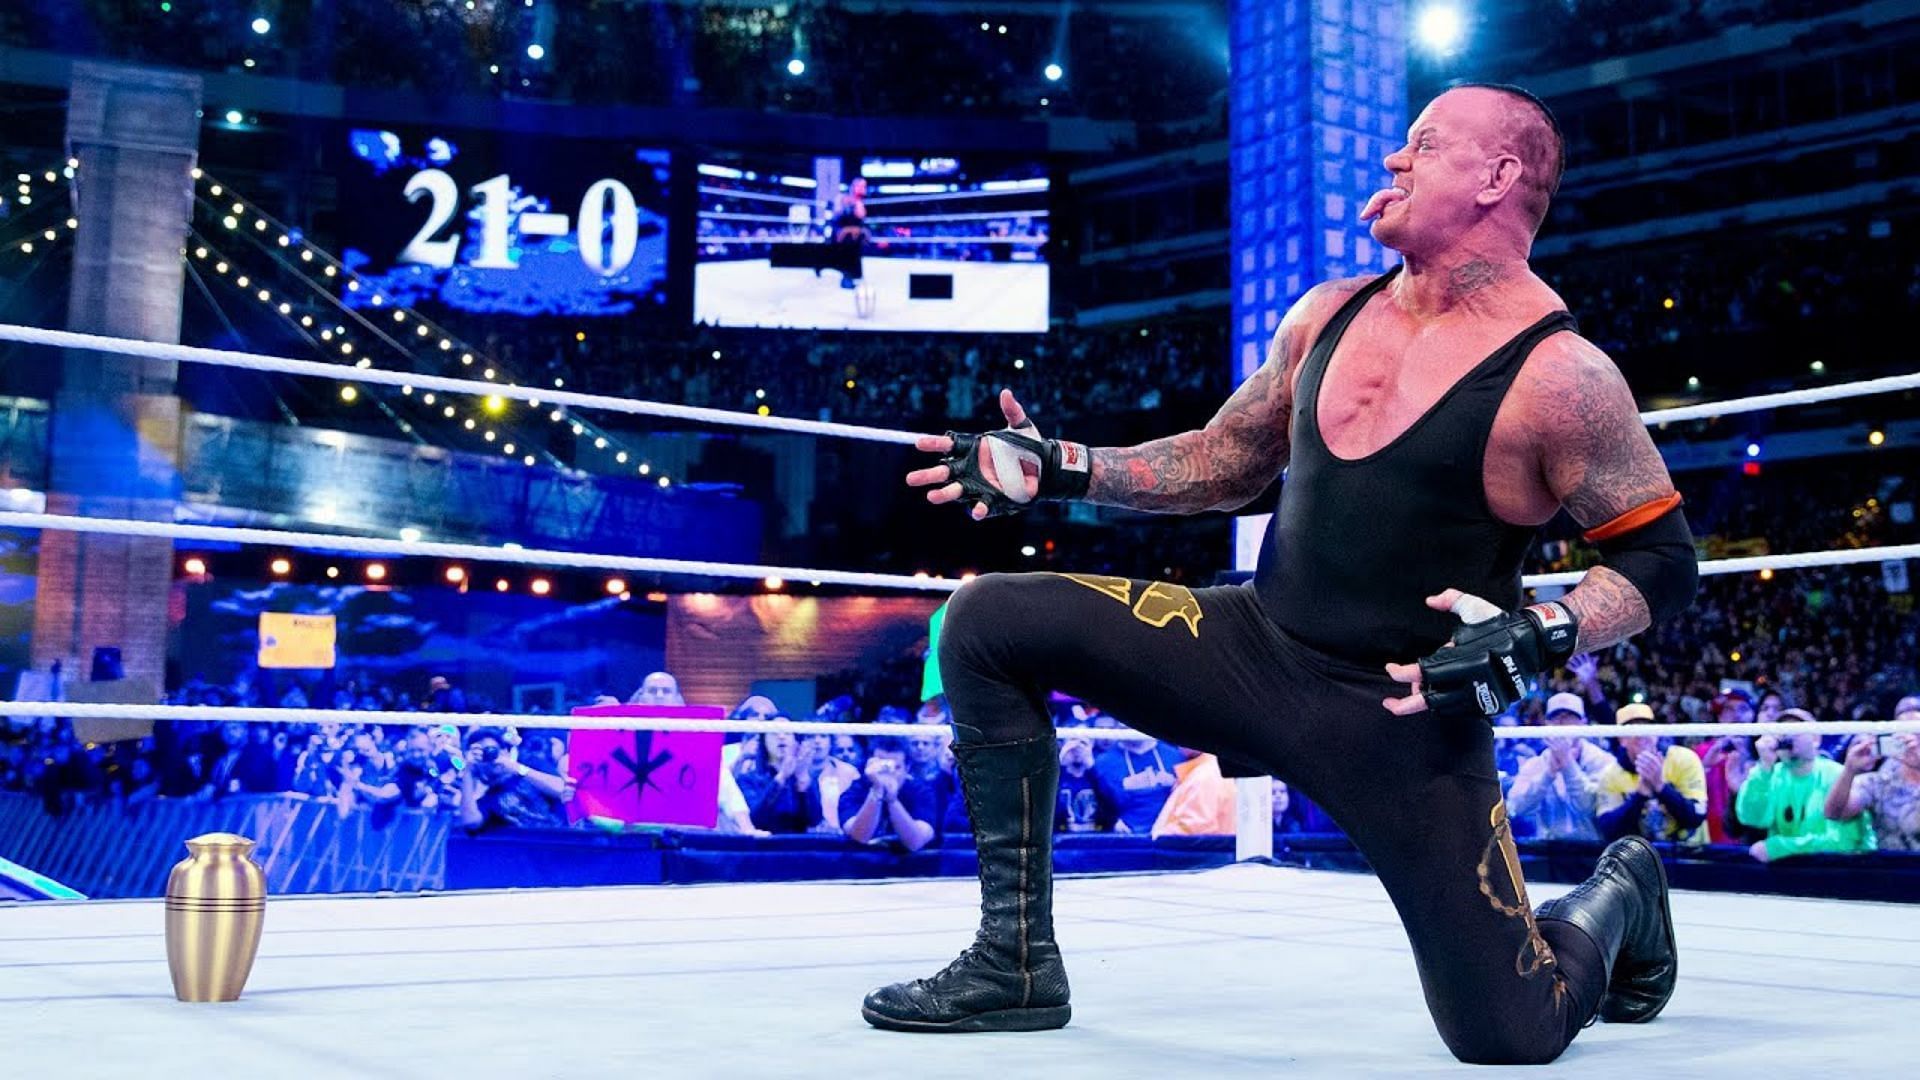 The Undertaker is a legendary wrestler